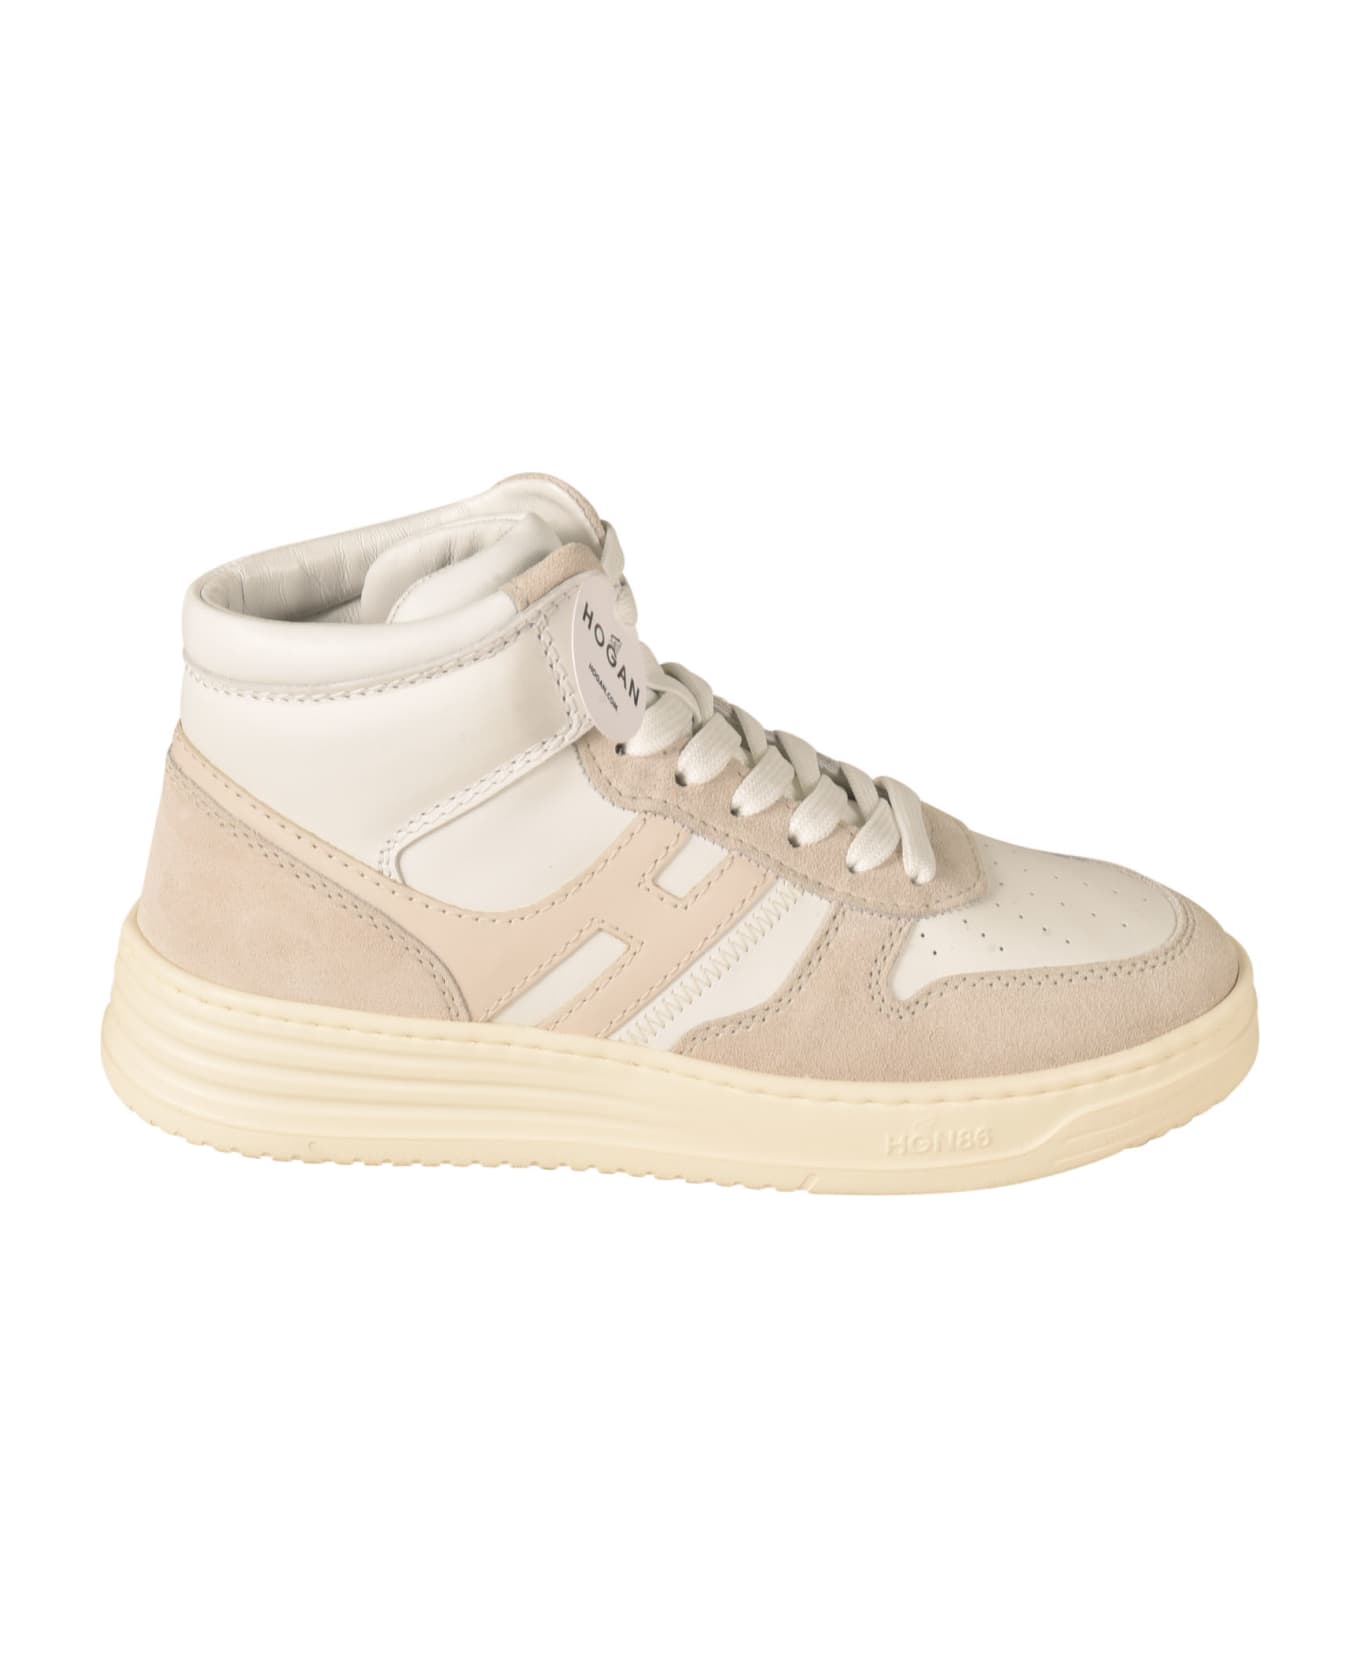 Hogan H630 Basket Sneakers - White